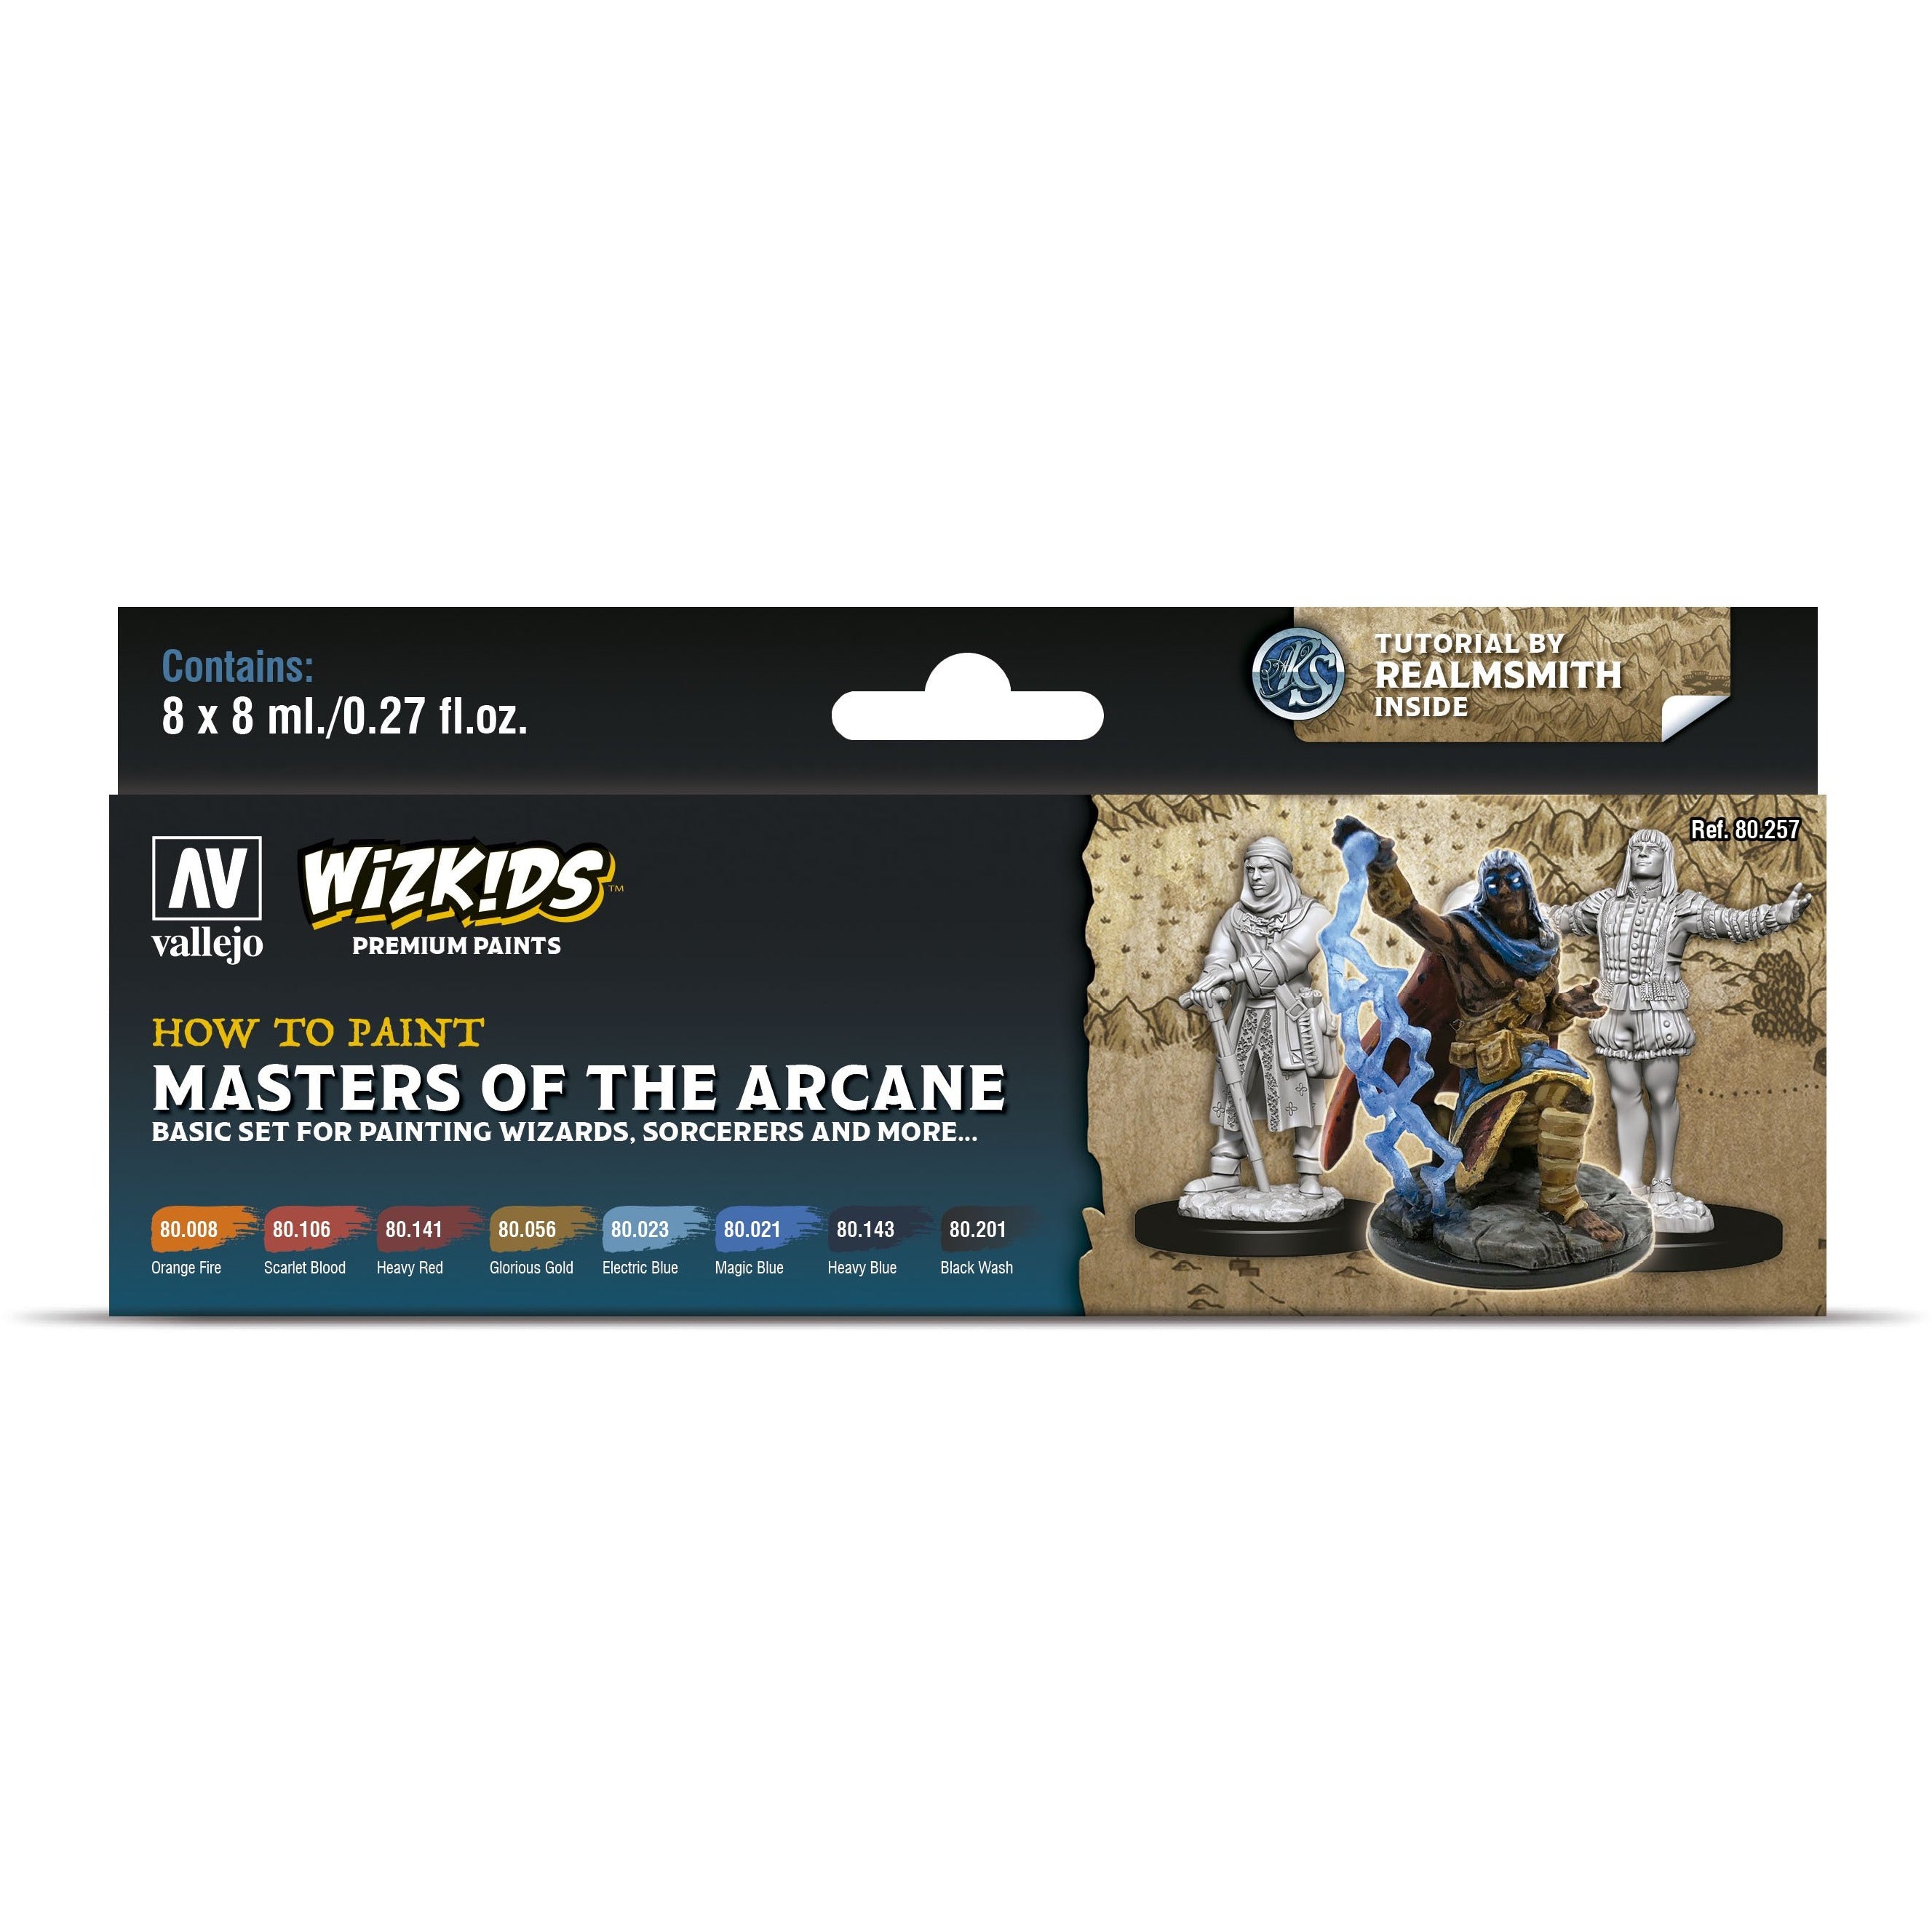 WIZK!DS Premium Paint Set Masters of the Arcane